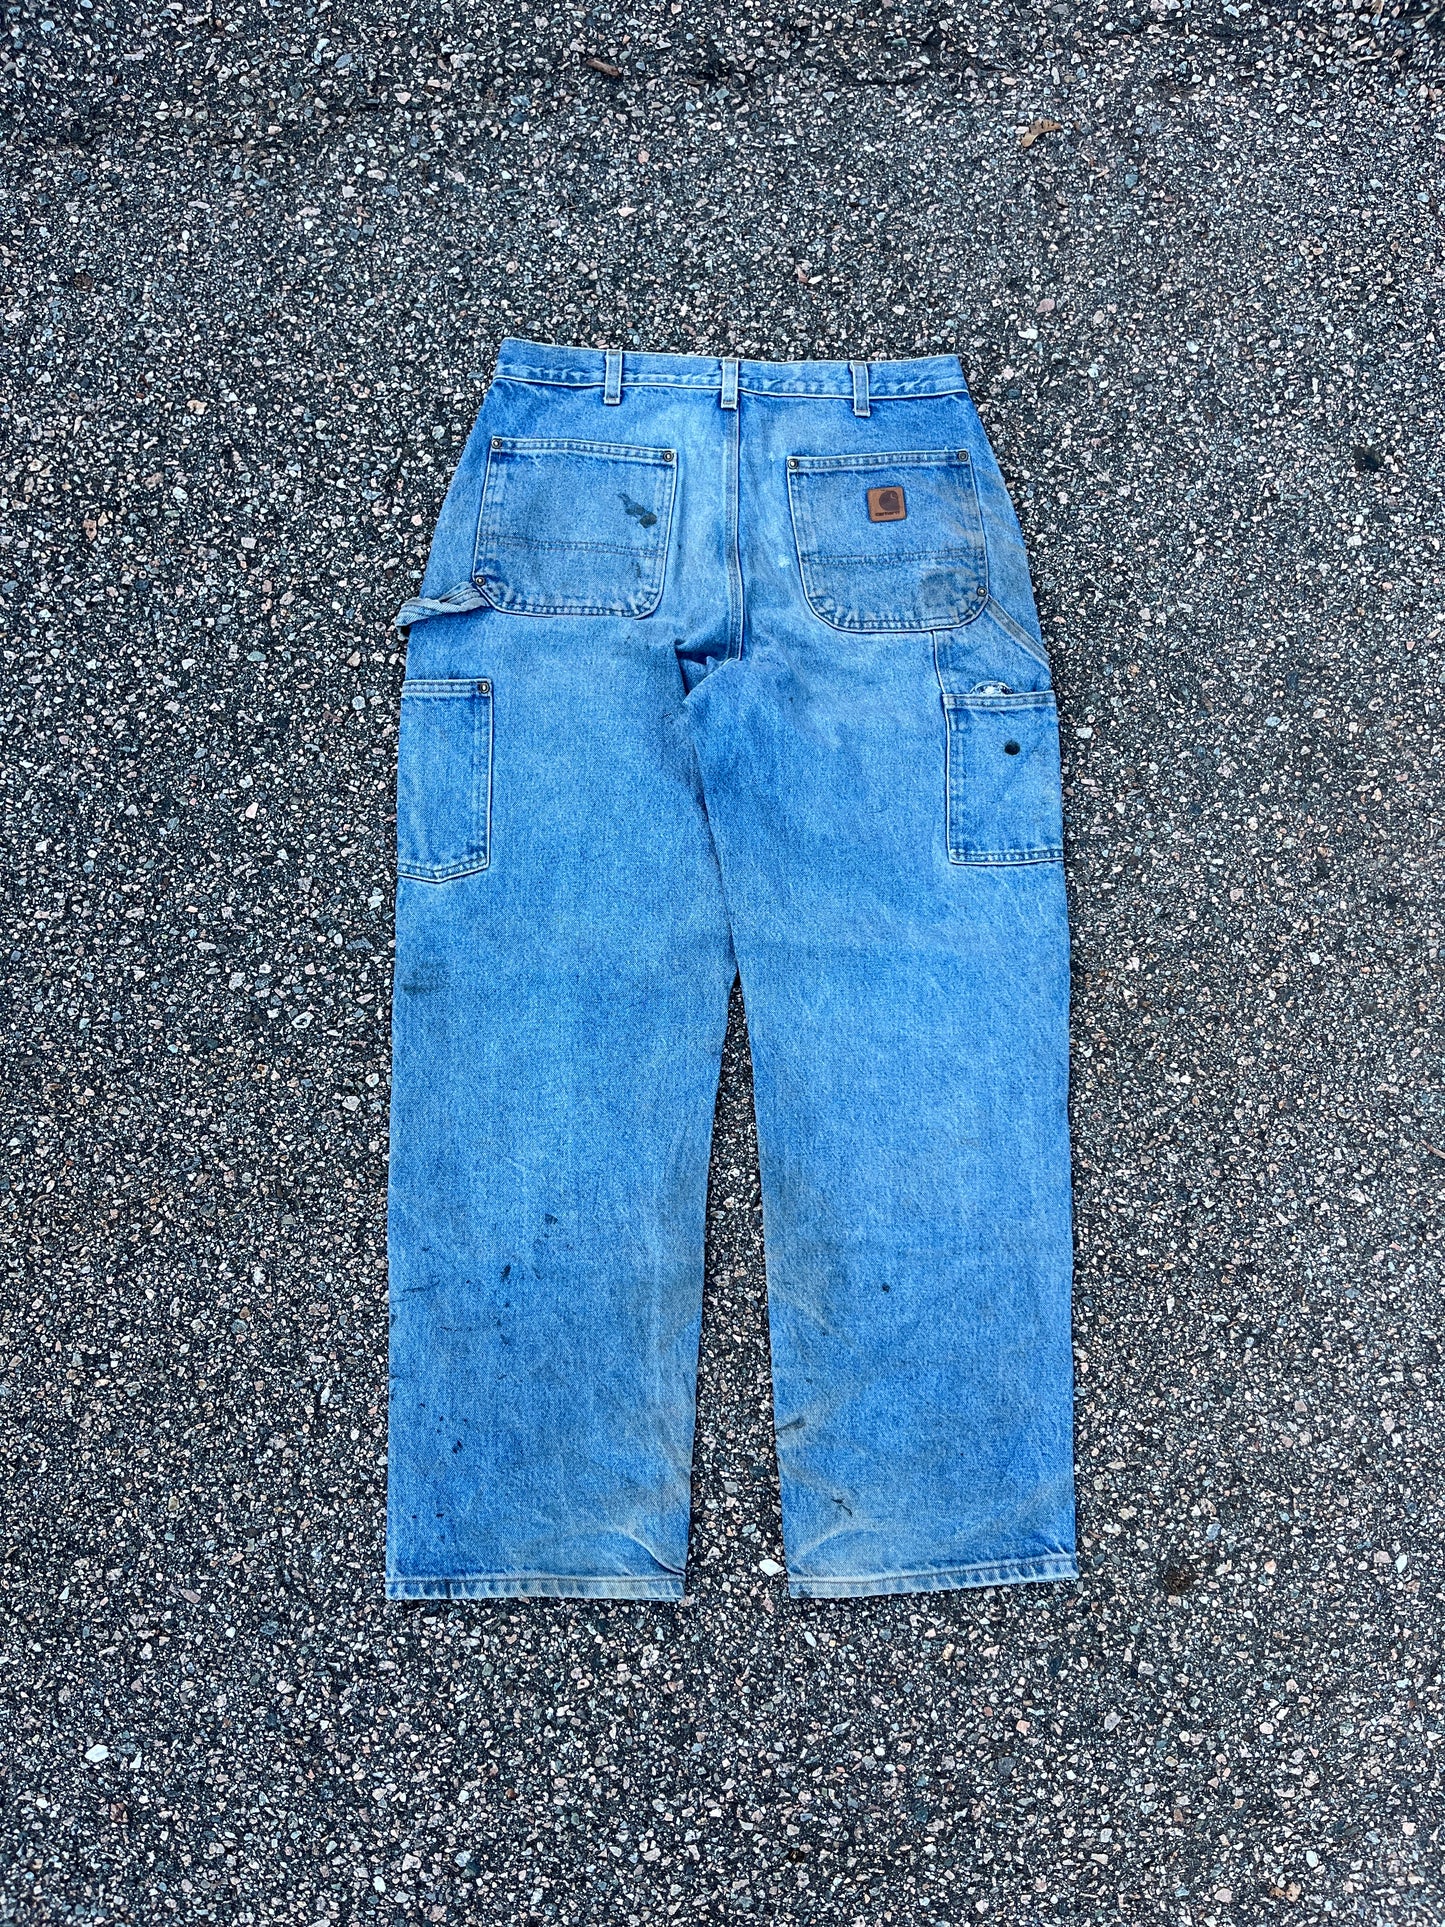 Vintage Carhartt Carpenter Jeans in Light Blue Denim